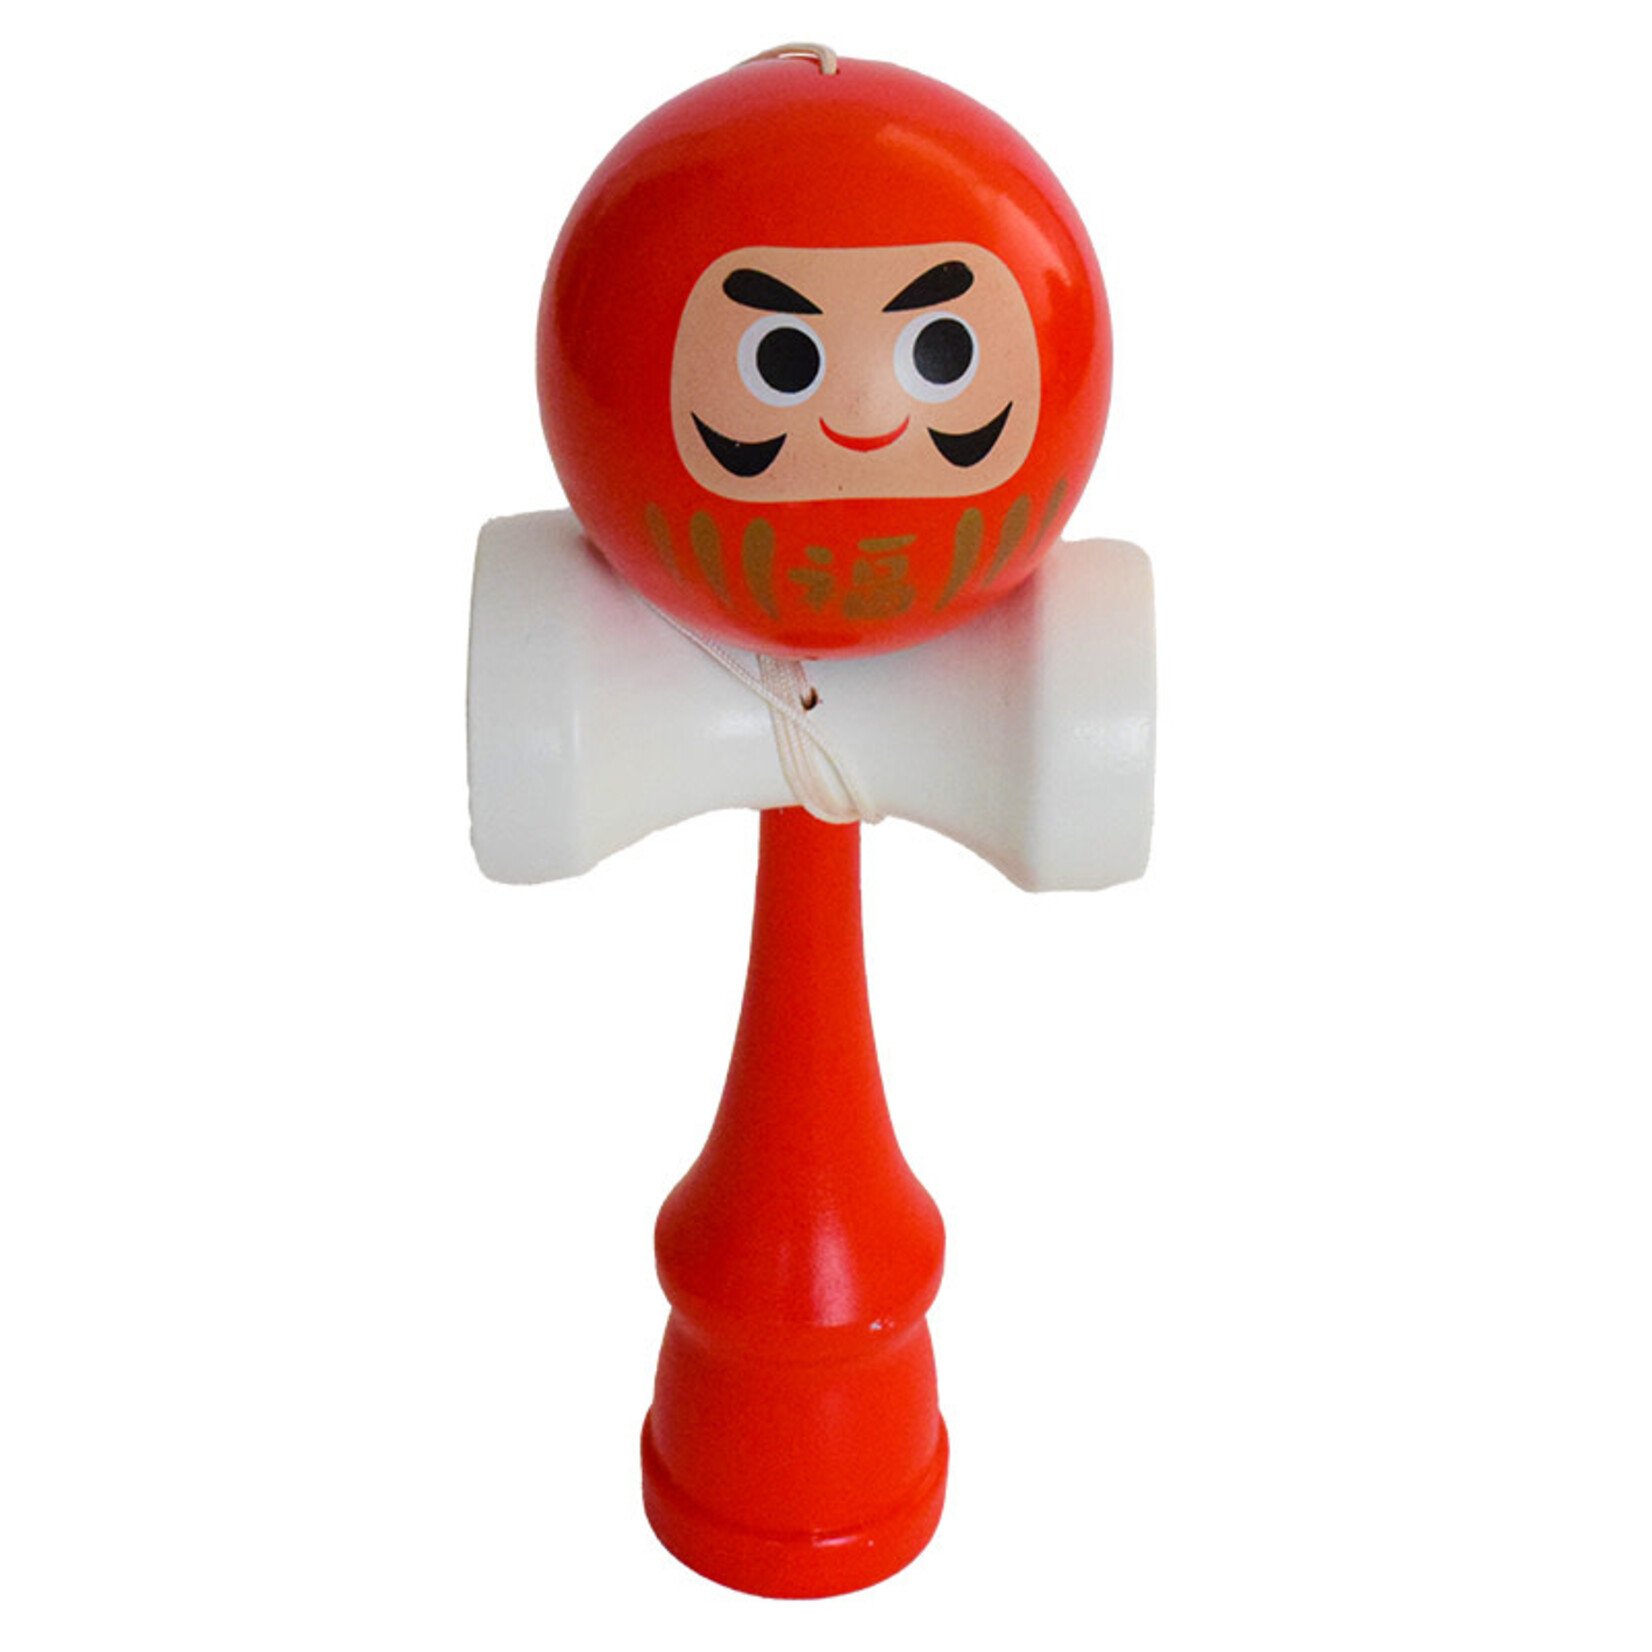 Red Daruma Kendama (Cup & Ball Toy) - 6"